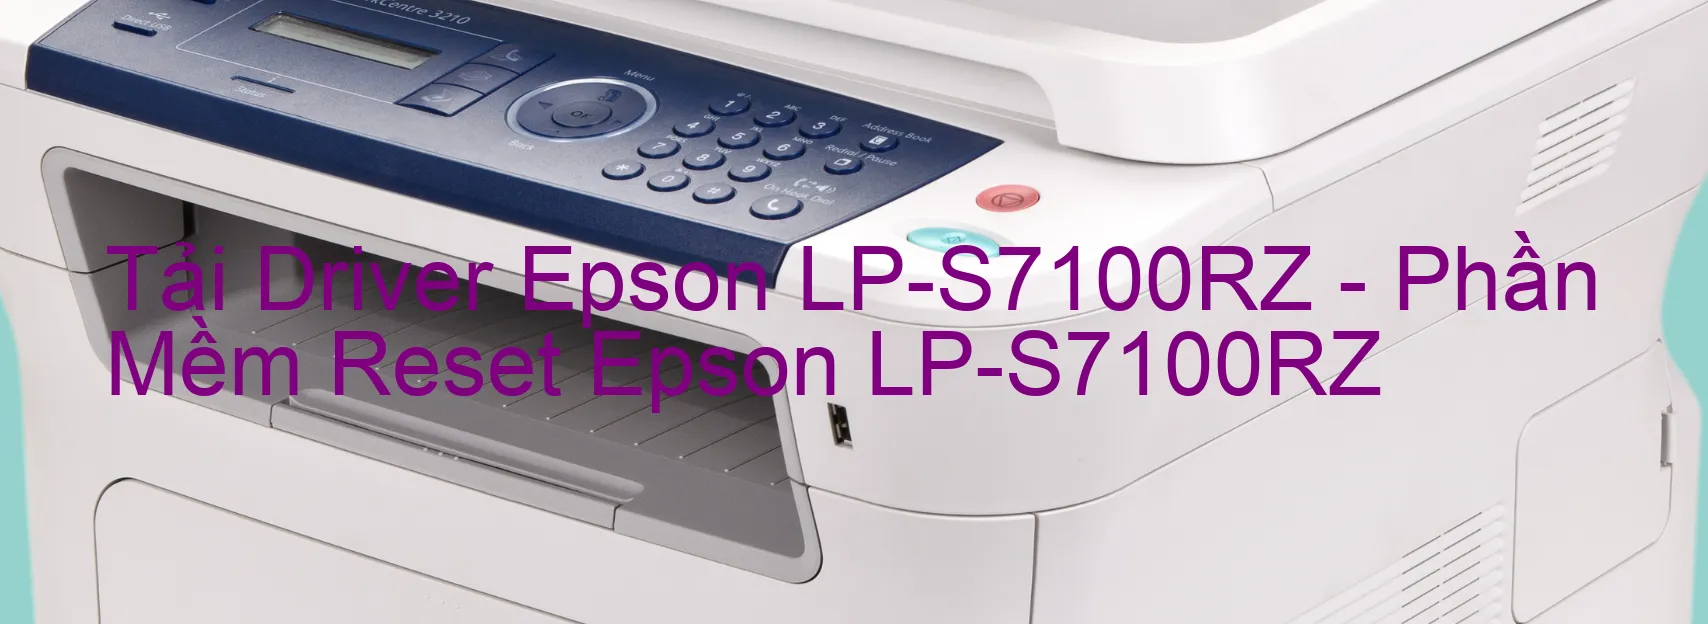 Driver Epson LP-S7100RZ, Phần Mềm Reset Epson LP-S7100RZ